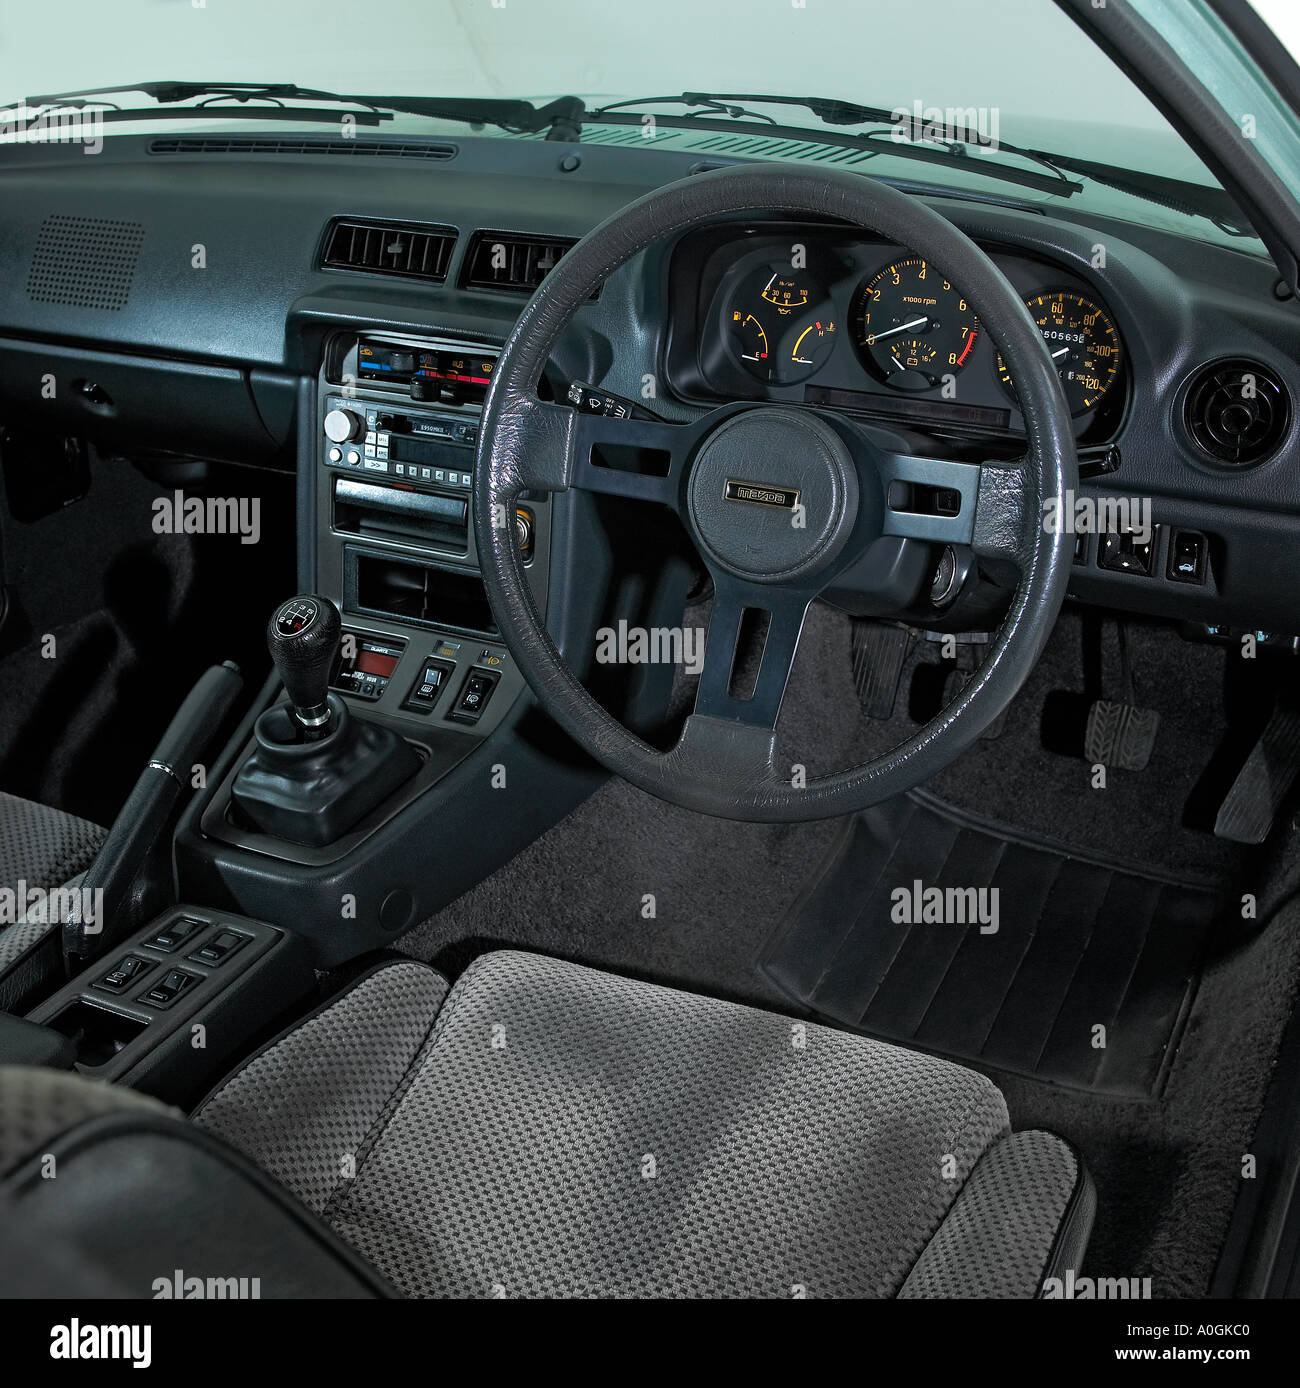 1986 Mazda Rx7 Stockfoto Bild 3261375 Alamy